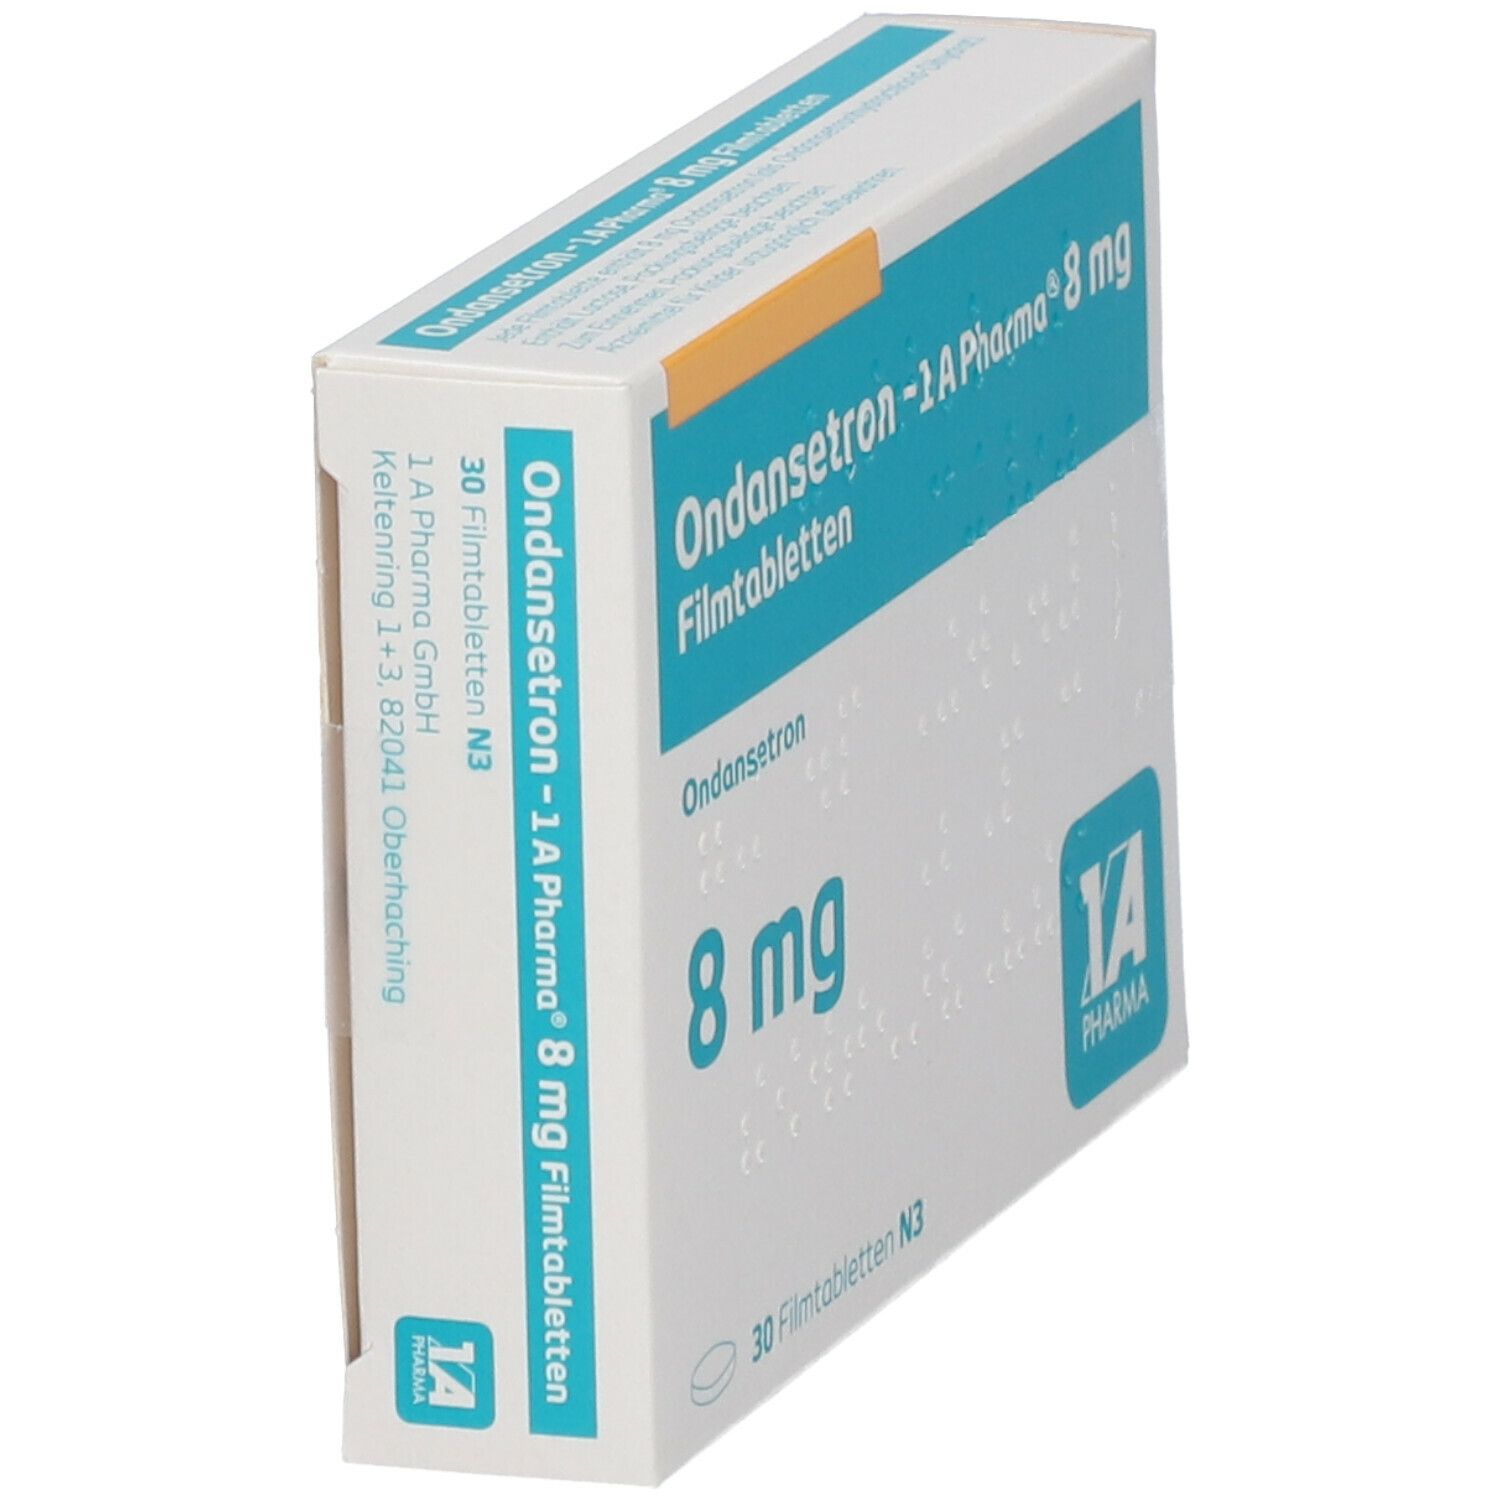 Ondansetron - 1 A Pharma® 8 mg